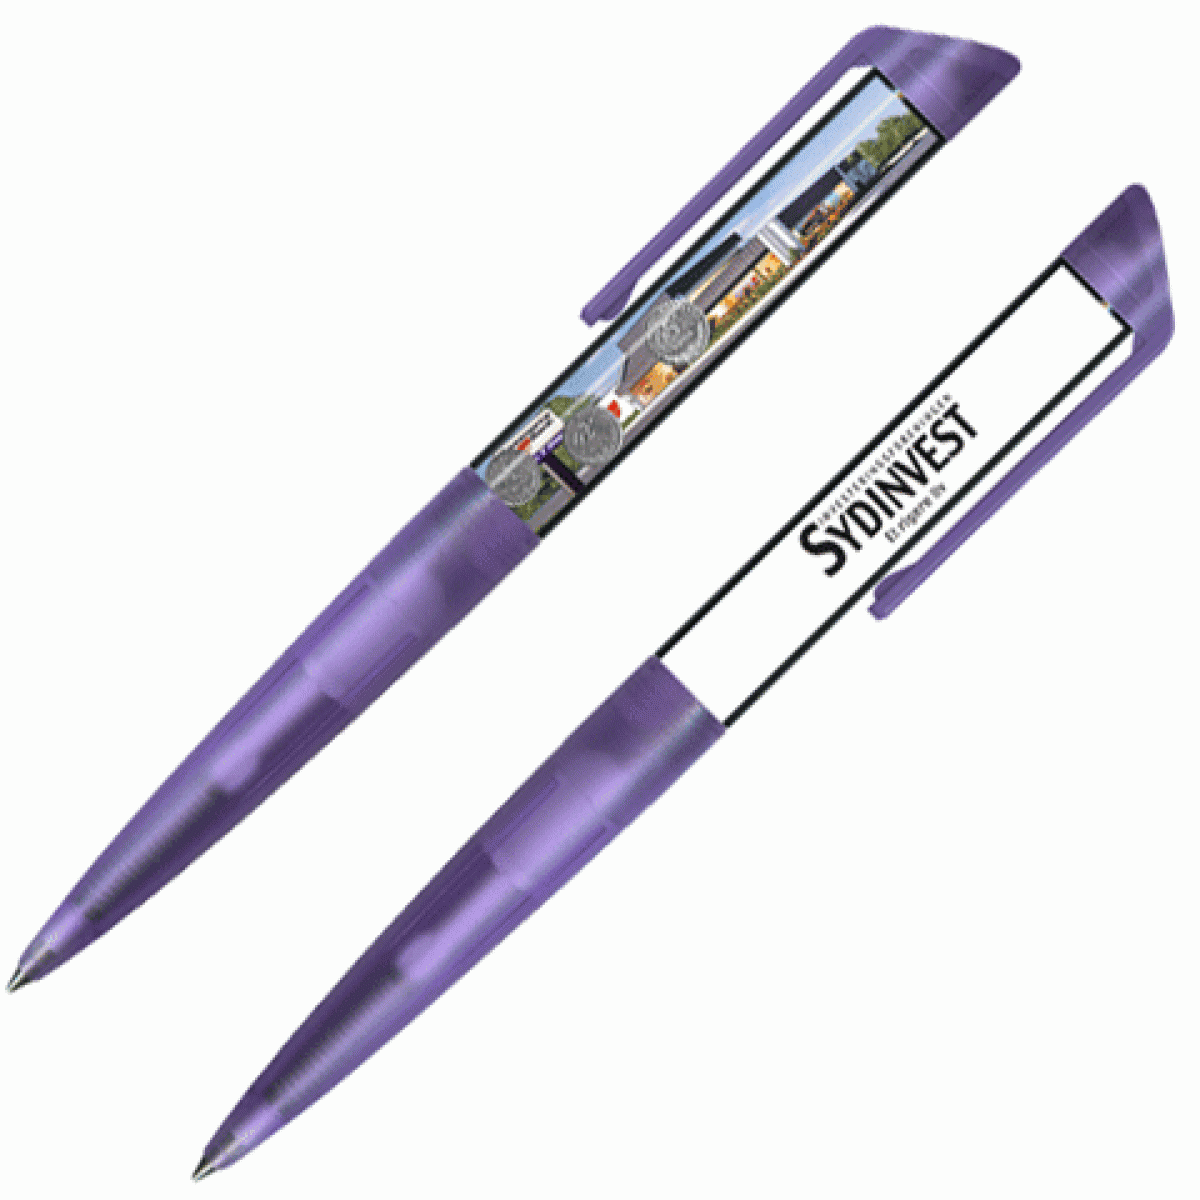 Ручка с плавающими элементами  или логотипом